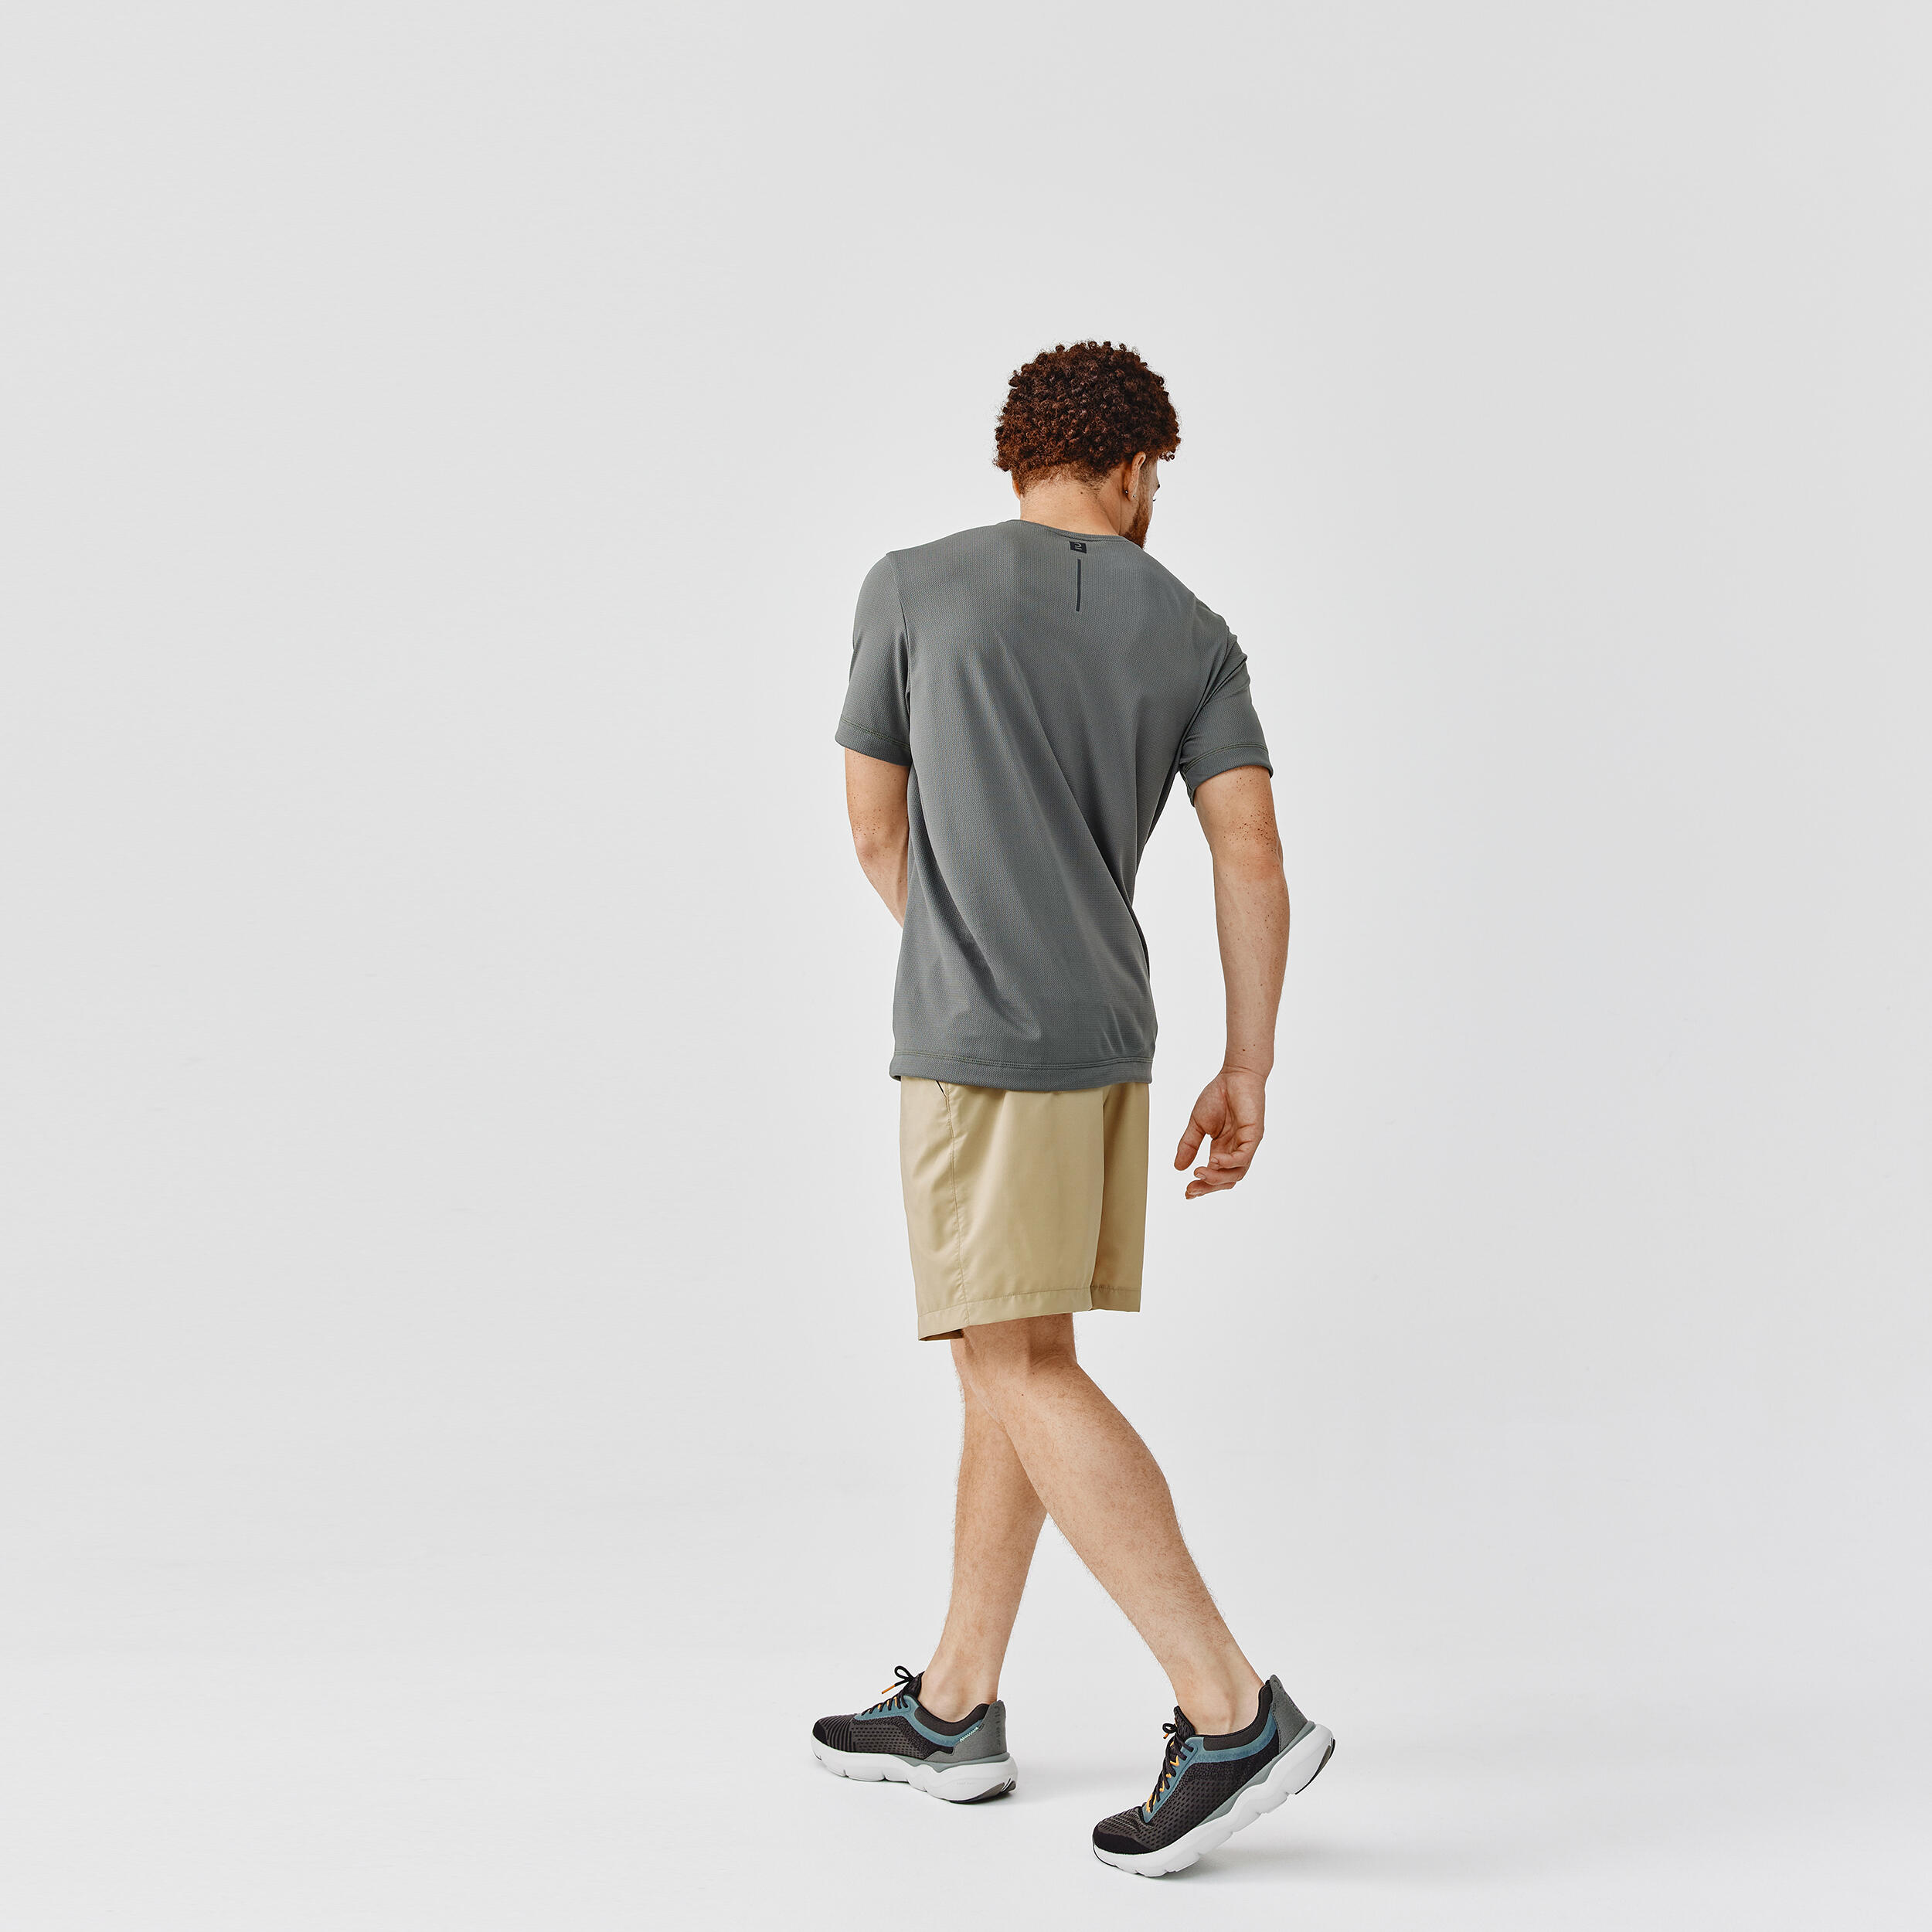 Dry Men's Breathable Running T-Shirt - Grey Khaki 6/8